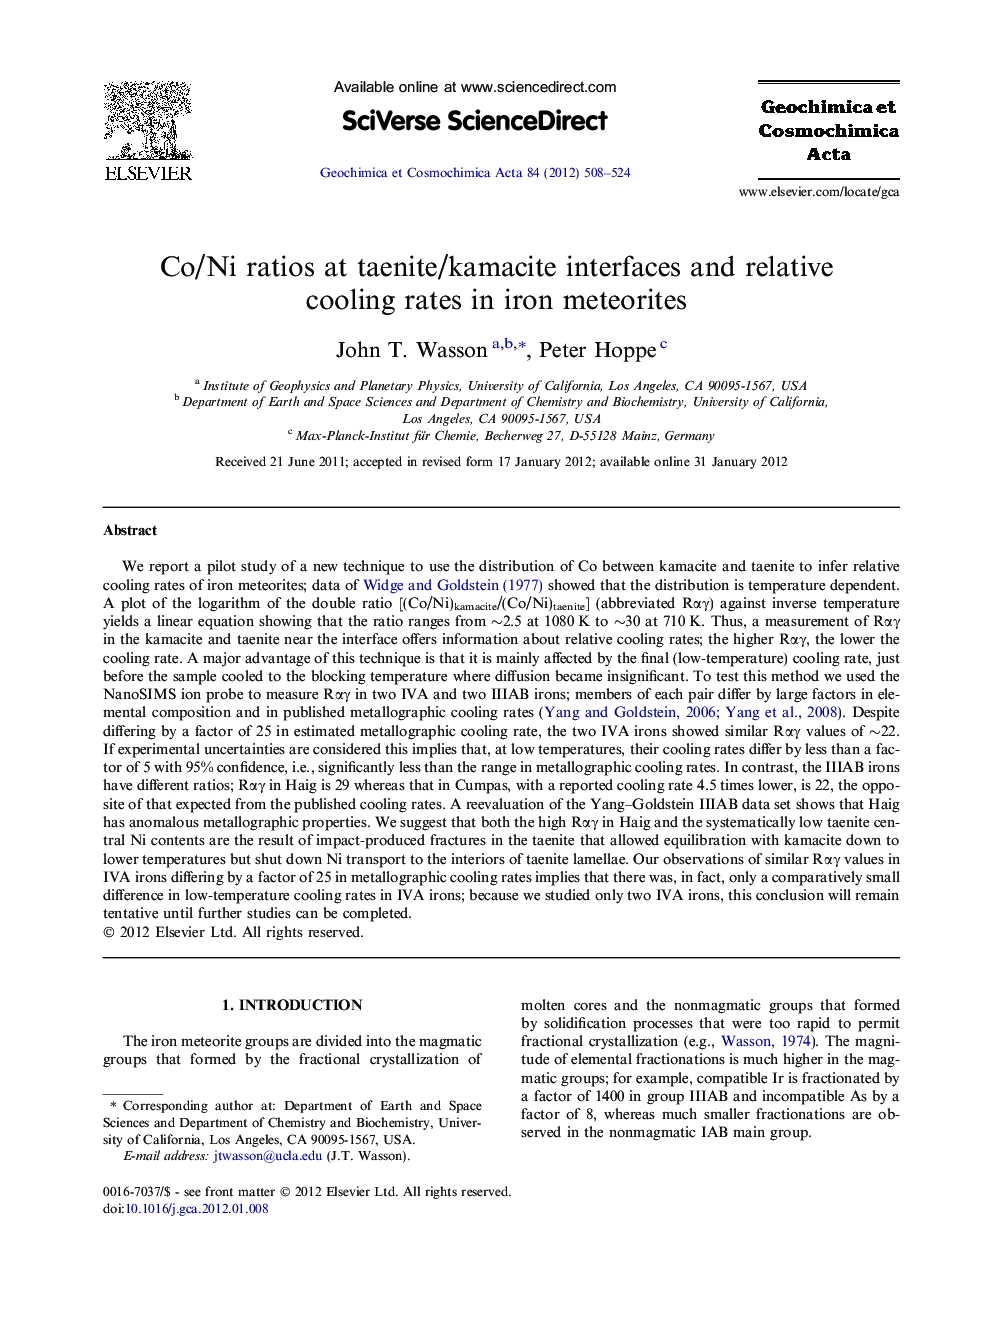 Co/Ni ratios at taenite/kamacite interfaces and relative cooling rates in iron meteorites